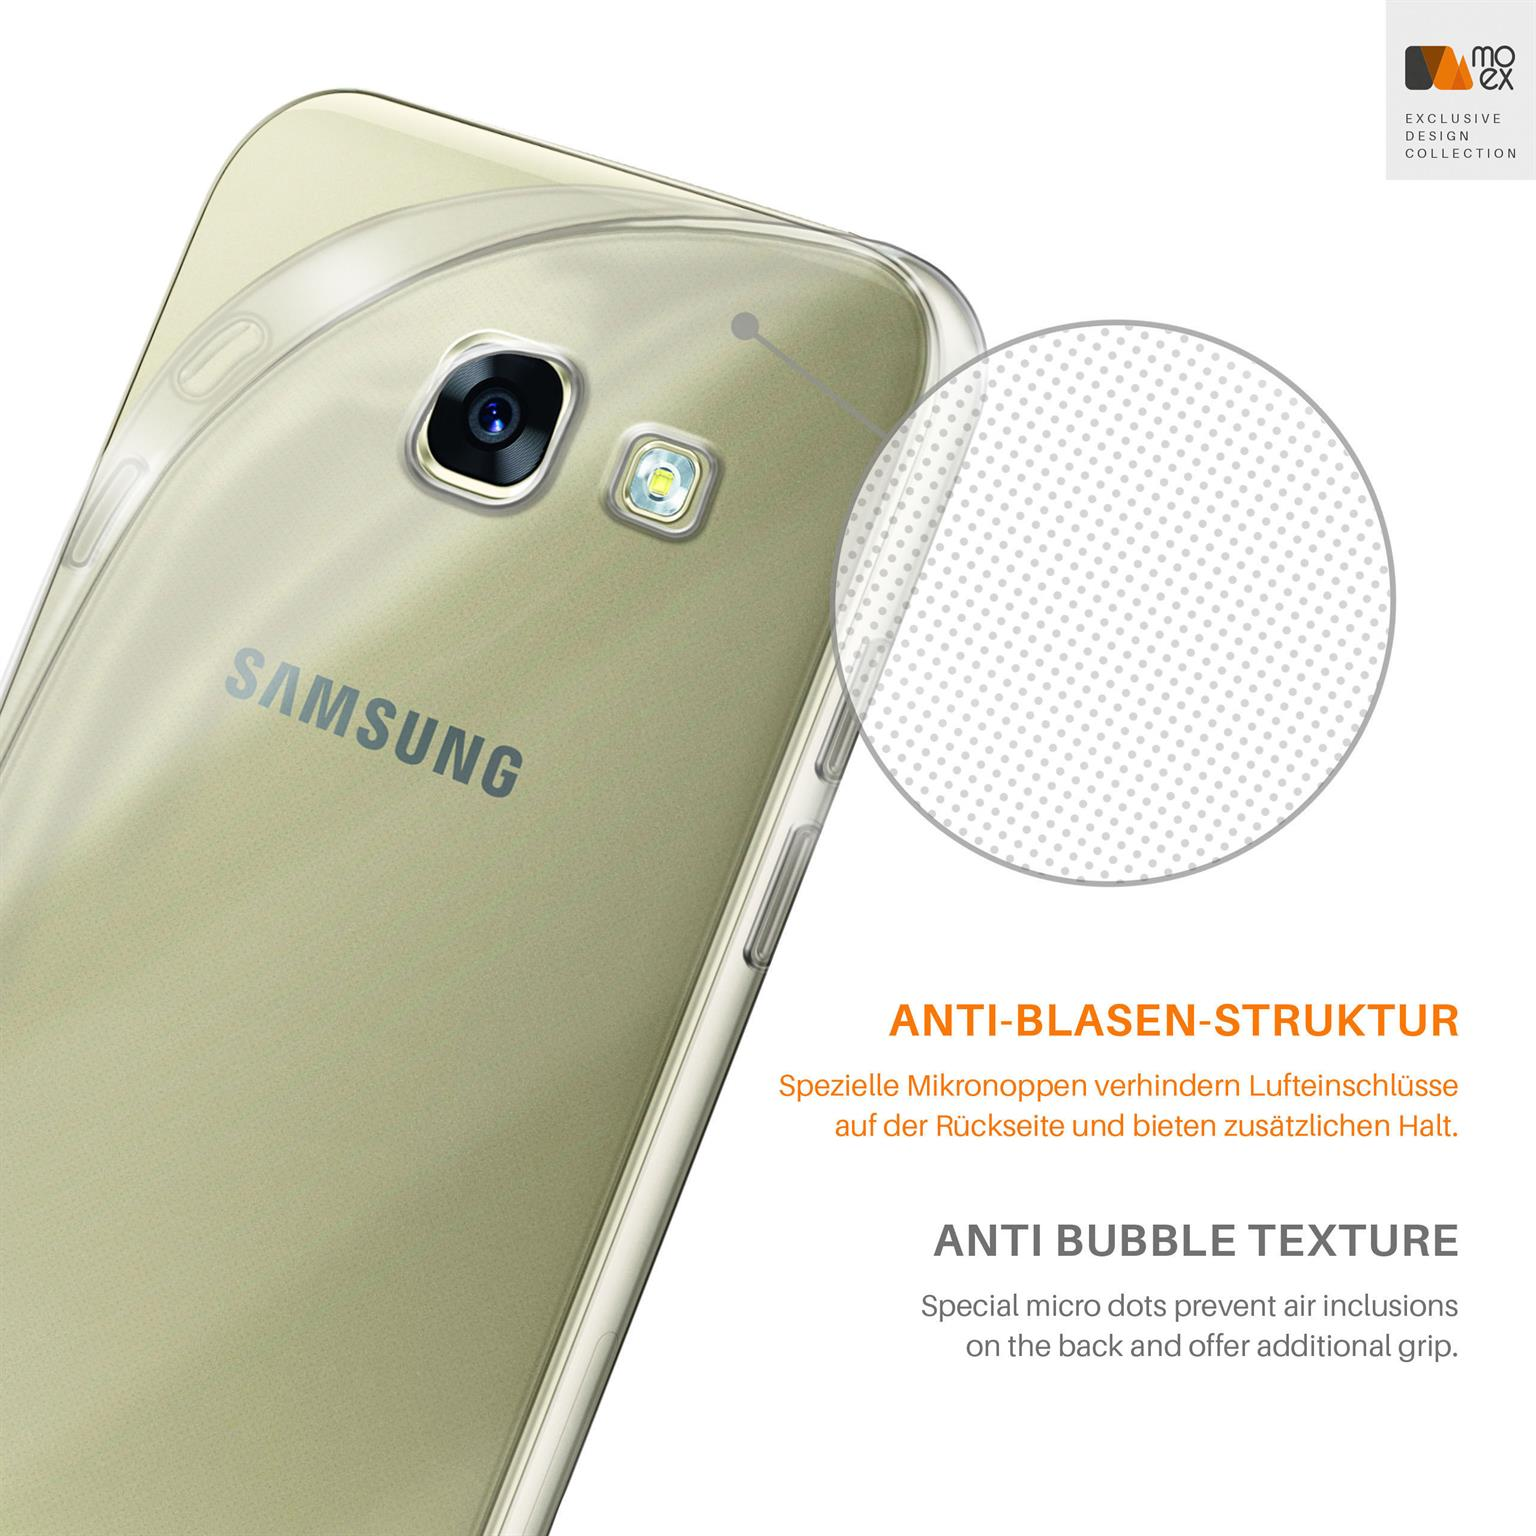 Galaxy Backcover, (2017), Case, MOEX Crystal-Clear Samsung, Aero A3